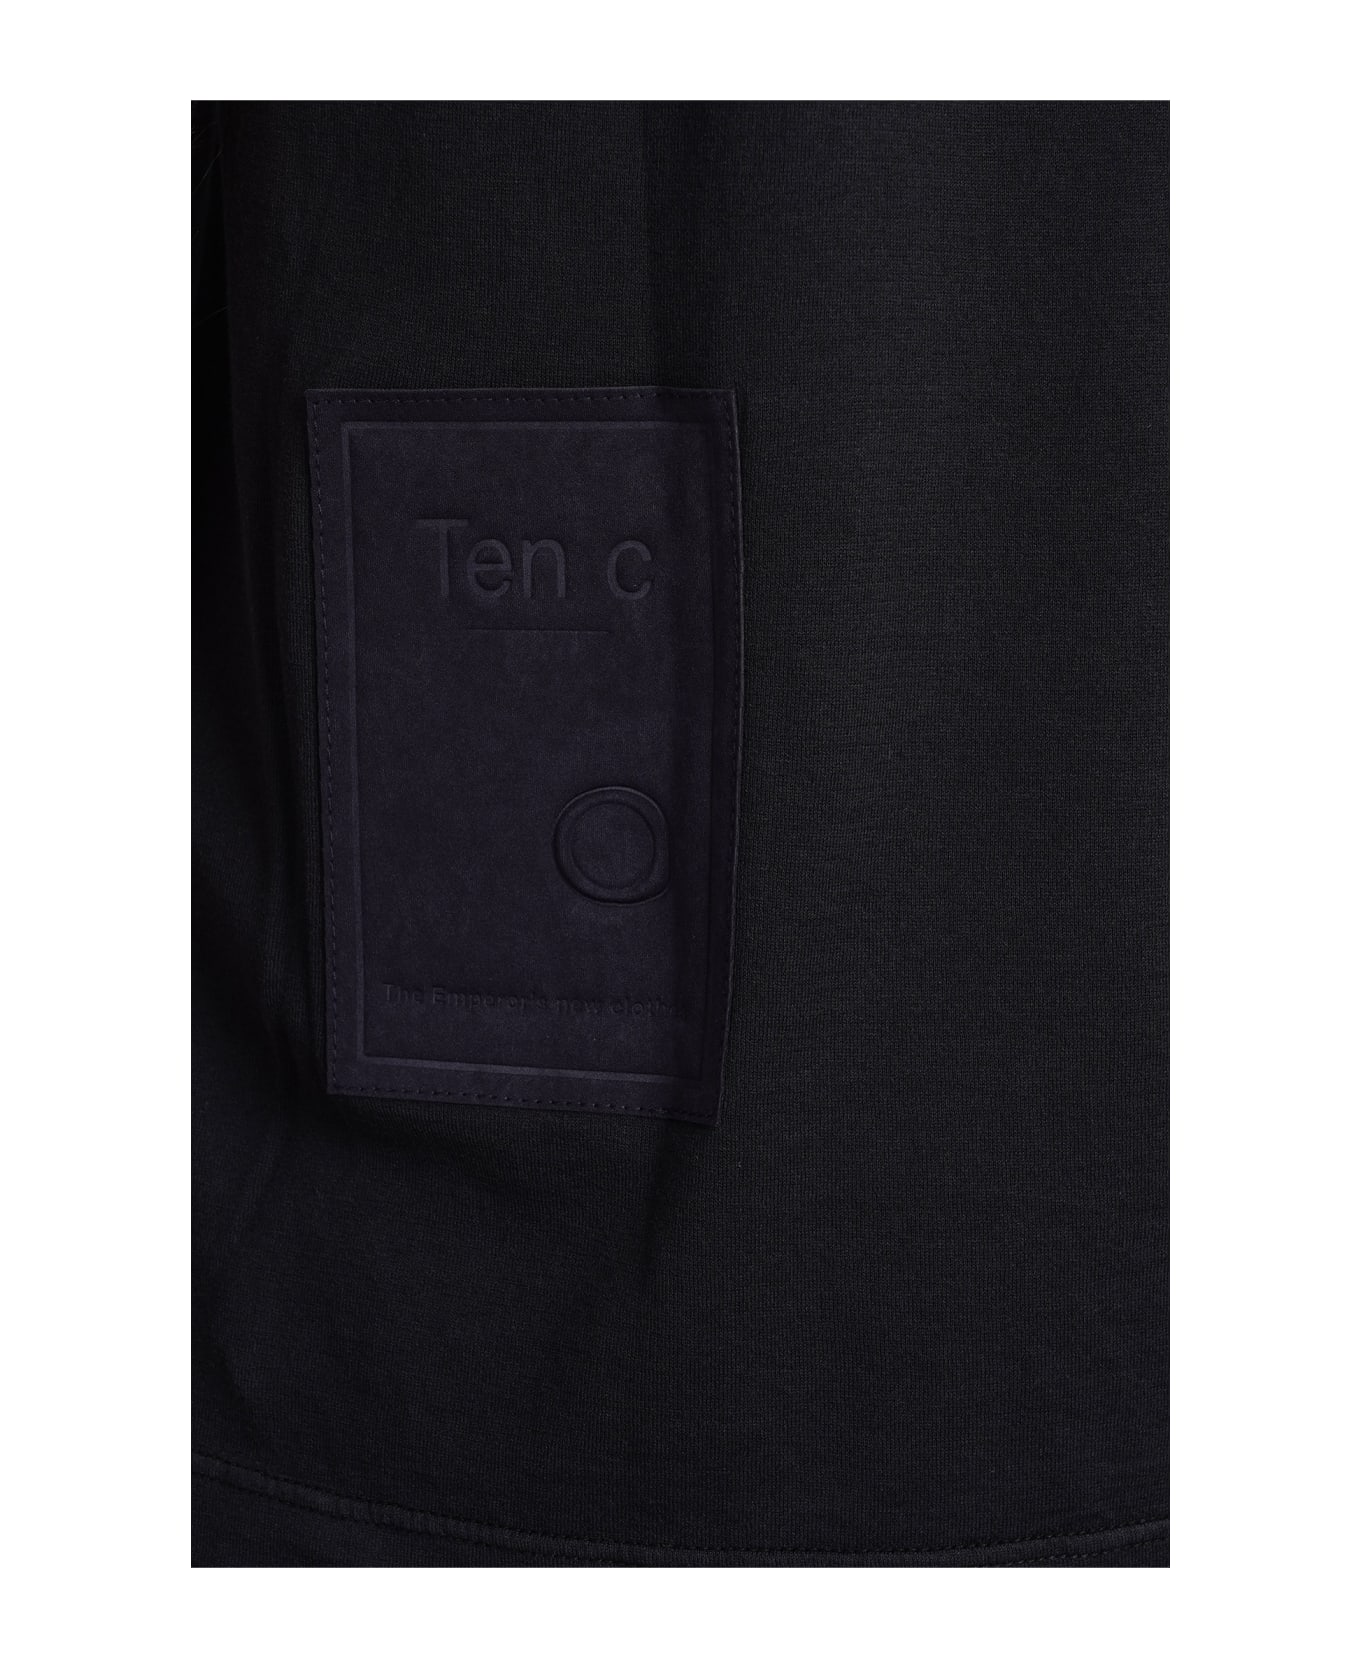 Ten C T-shirt In Black Cotton - black シャツ